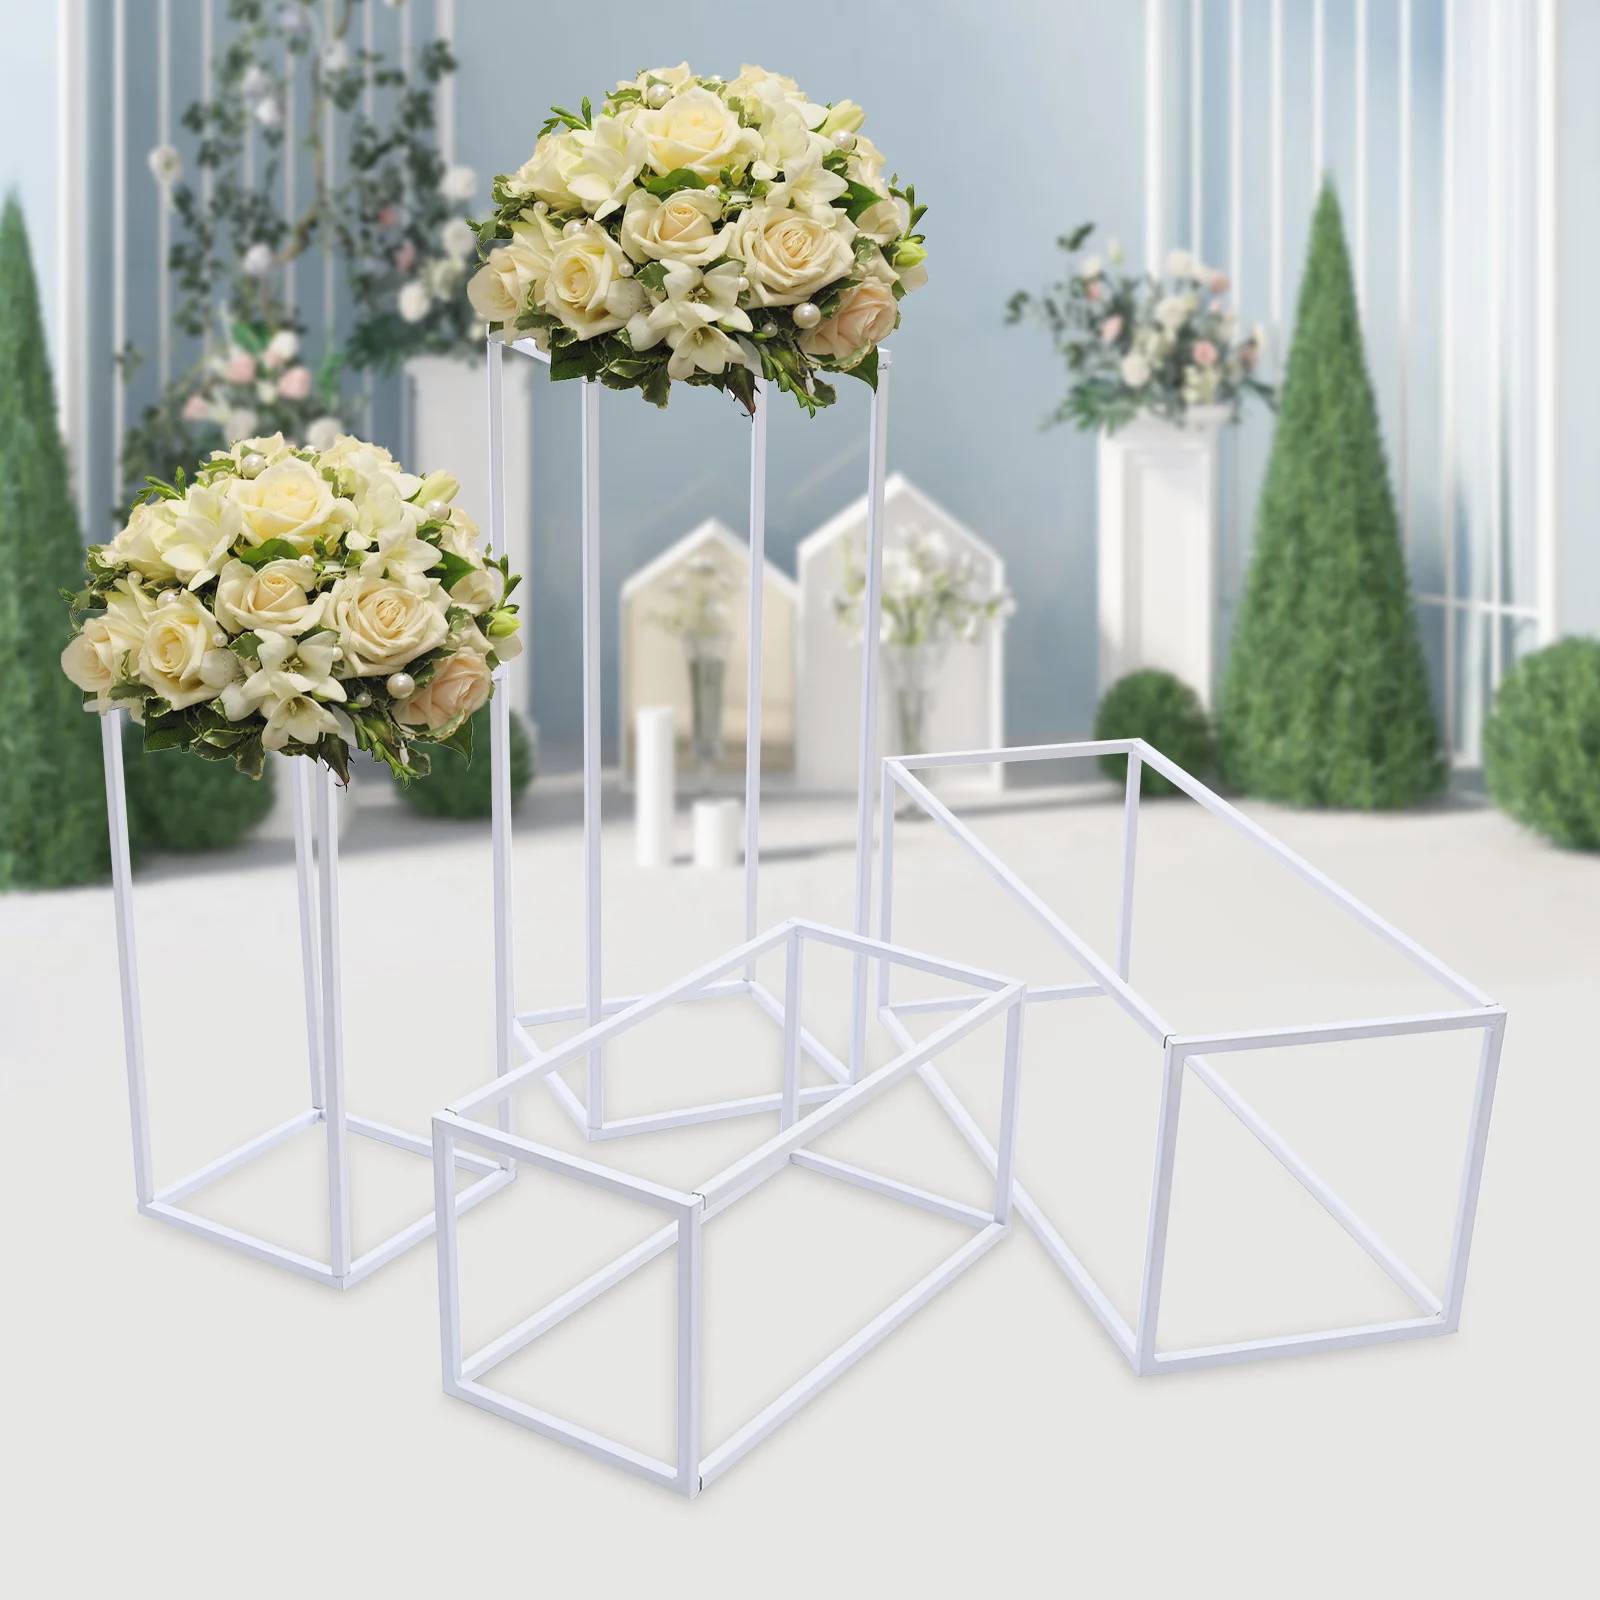 4Pcs White Metal Art Geometric Column Flower Stand Flower Rack Holder for Wedding Party Prop Backdrop Decoration (1Set)